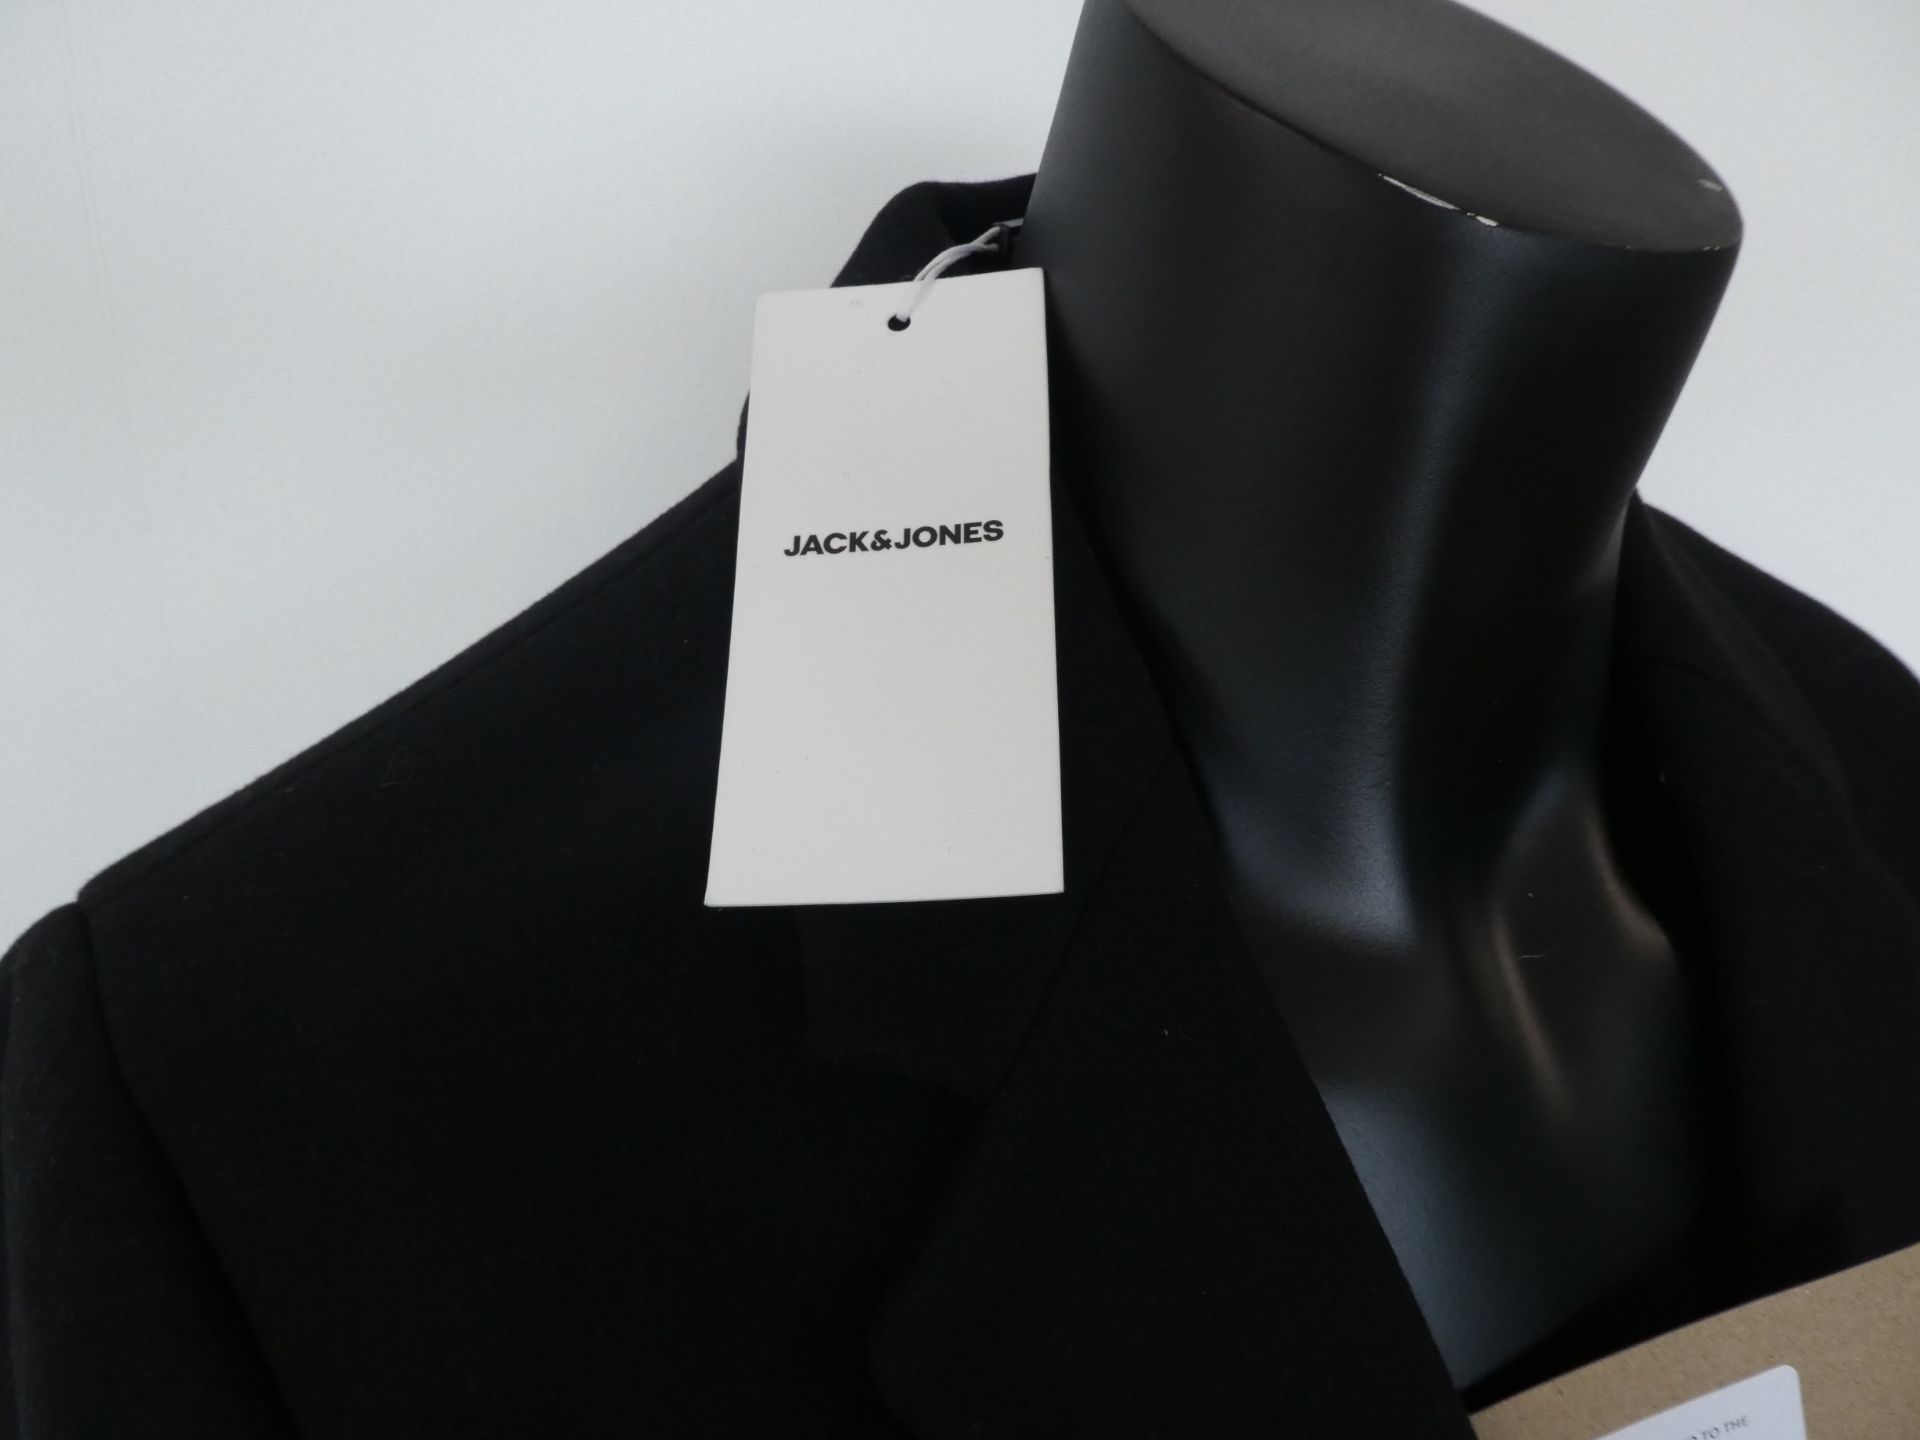 Jack & Jones wool blend coat in black size S - Image 2 of 2